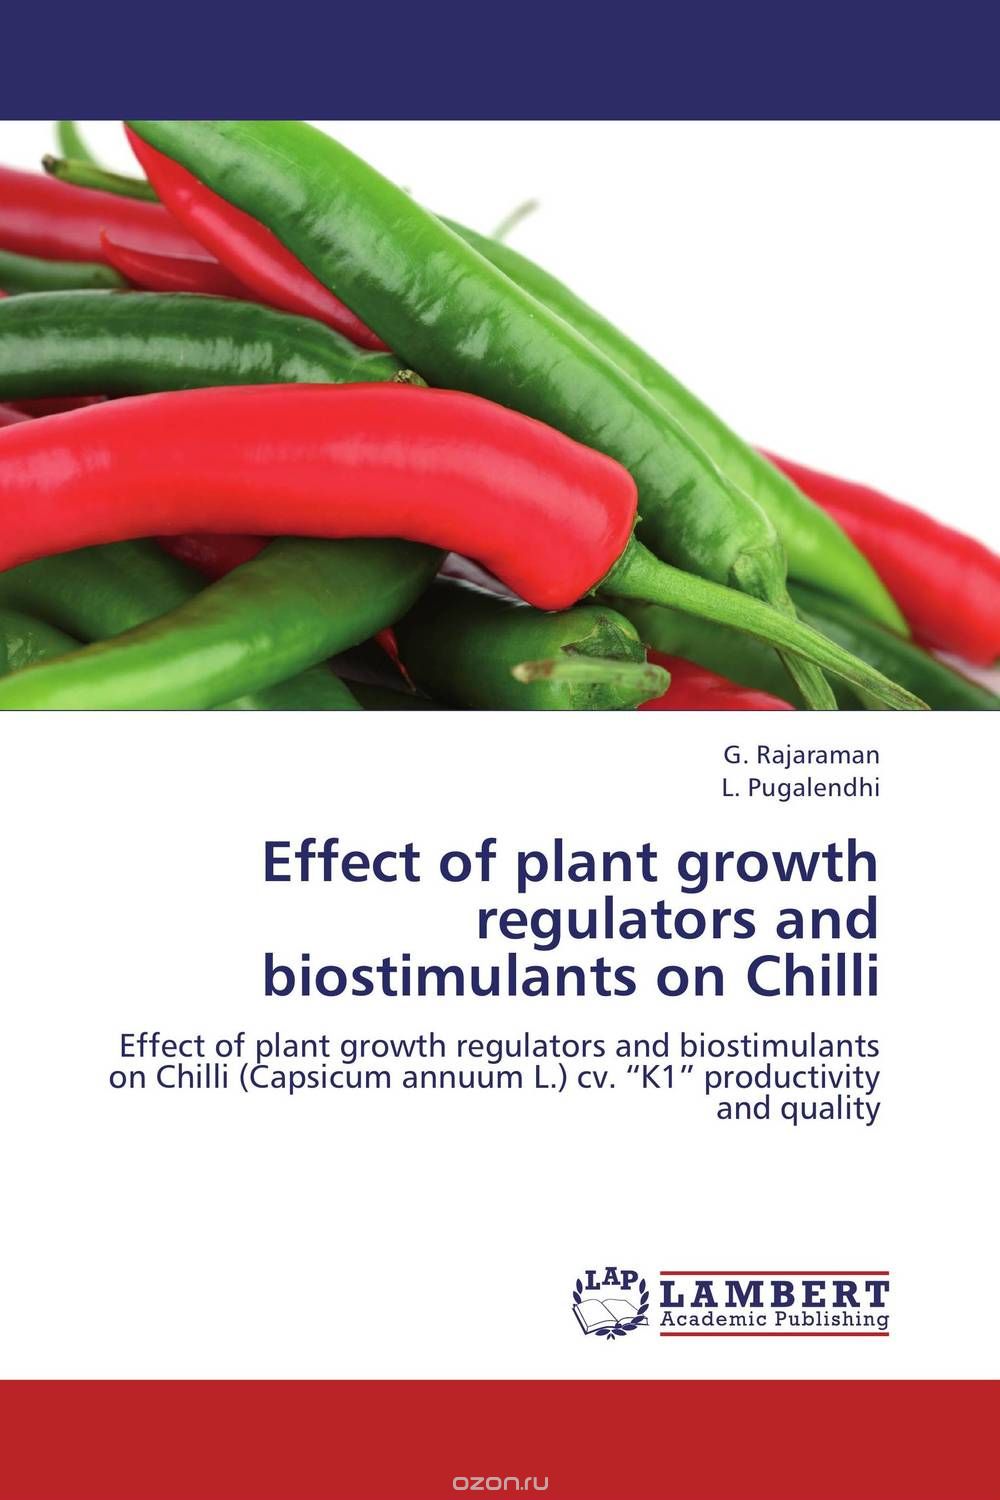 Скачать книгу "Effect of plant growth regulators and biostimulants on Chilli"